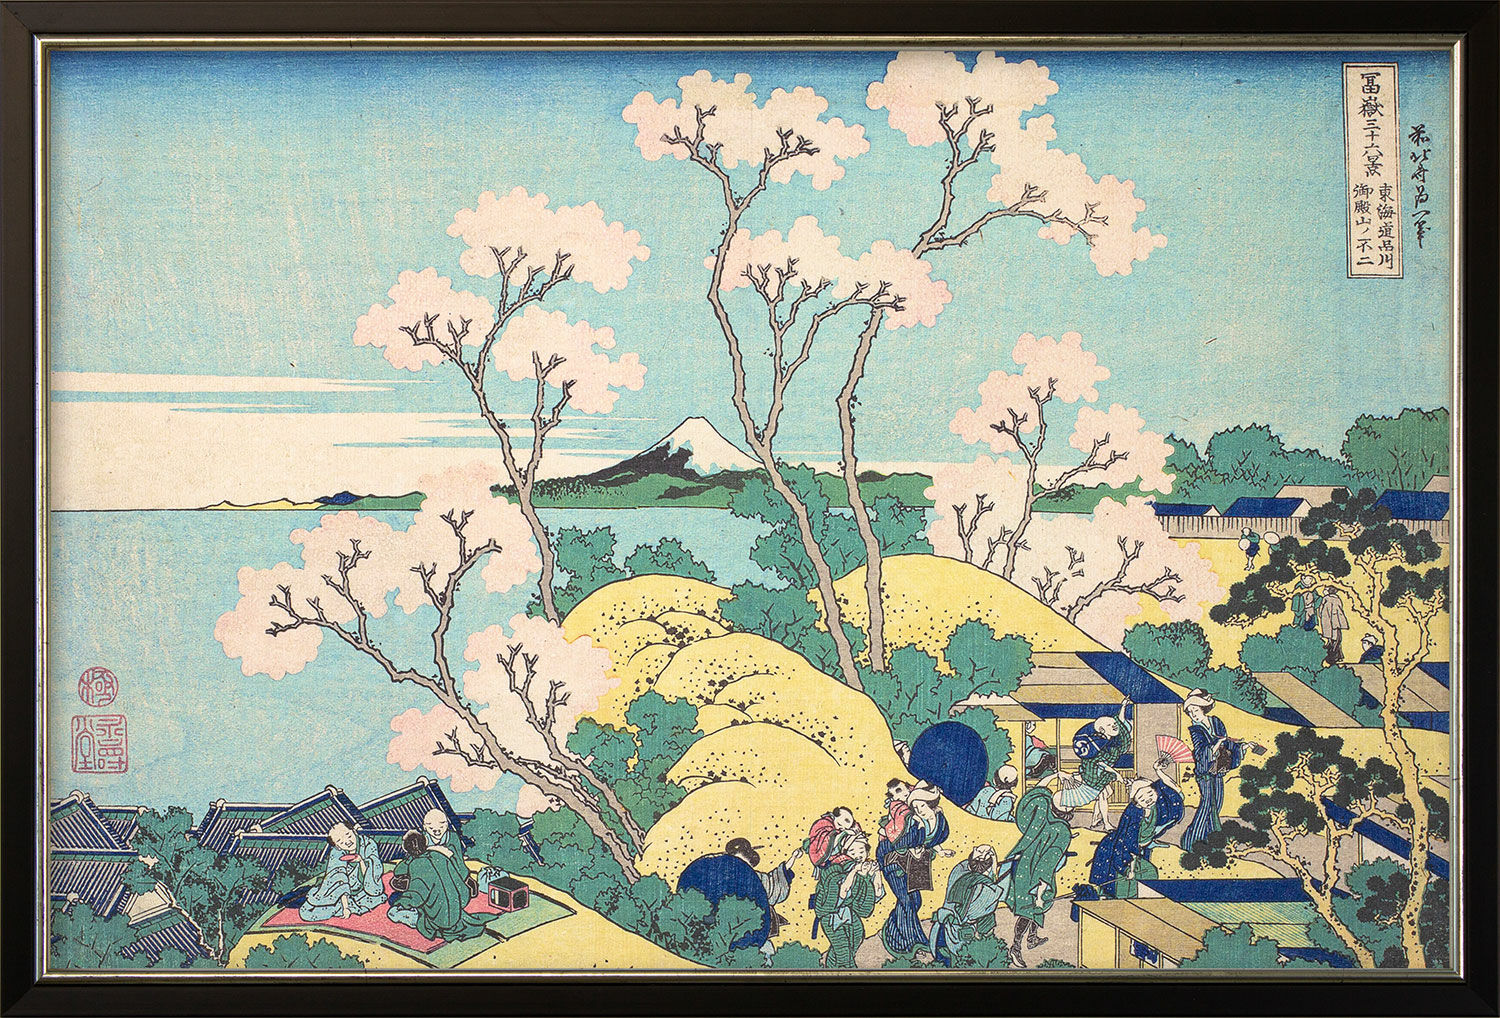 Billede "Fuji fra Gotenyama ved Shinagawa på Tōkaidō" (c. 1830-32), indrammet von Katsushika Hokusai